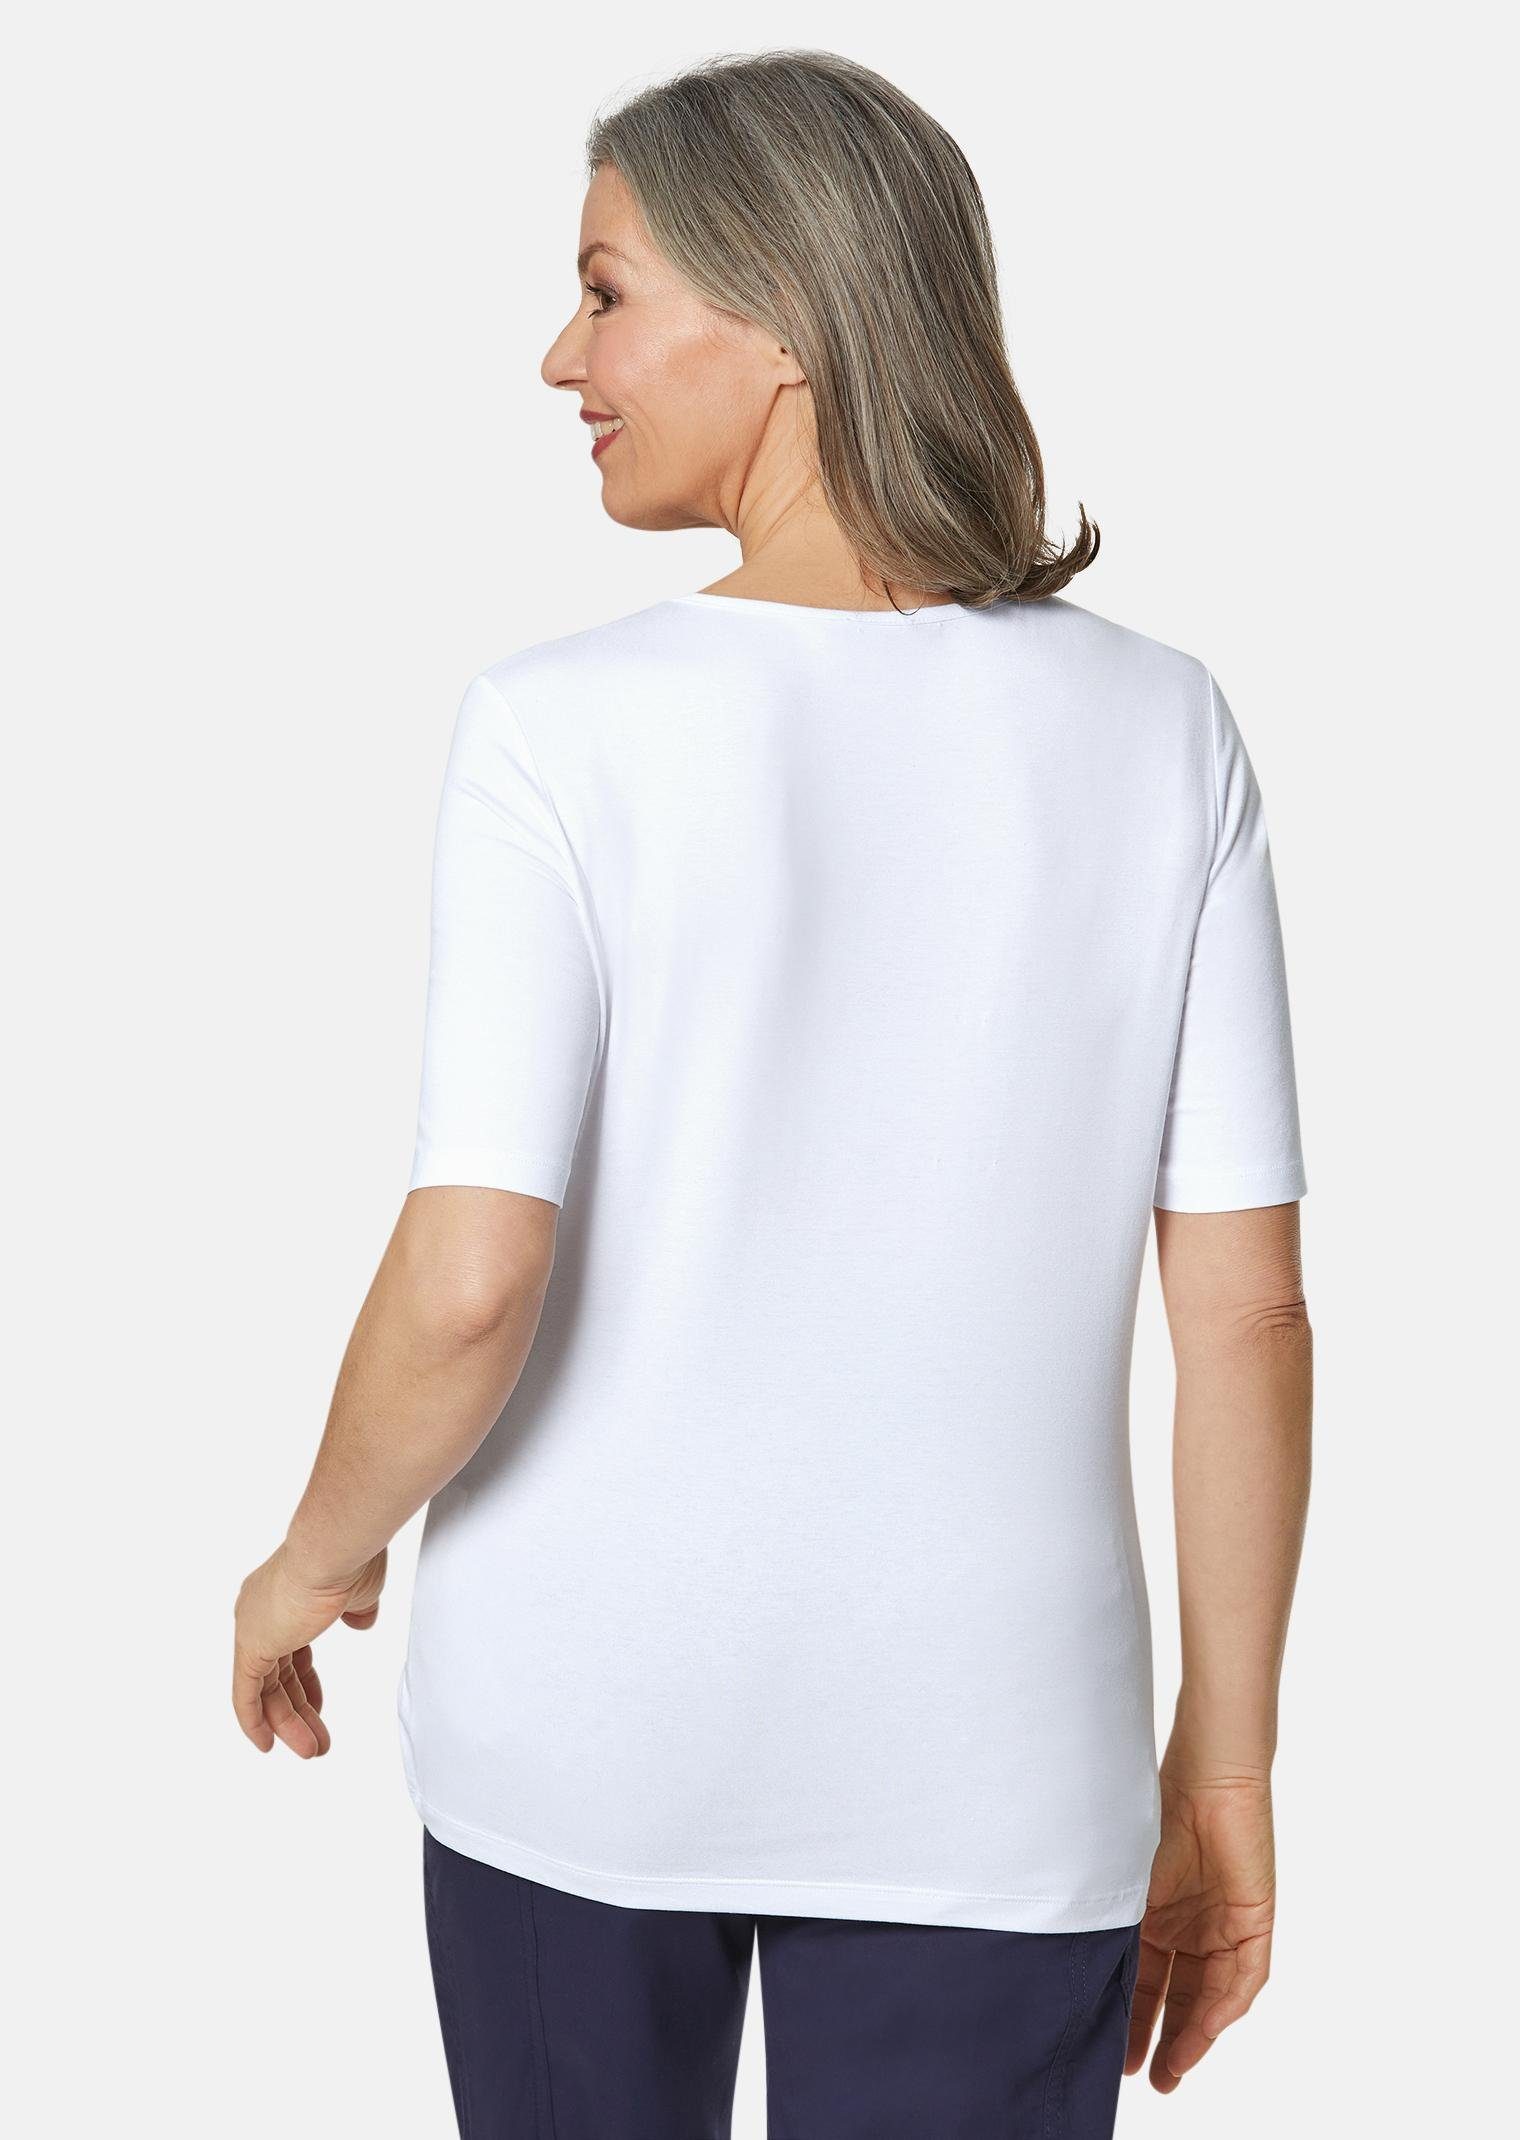 Damen Shirts GOLDNER Print-Shirt Attraktives Druckshirt in einzigartigem Look